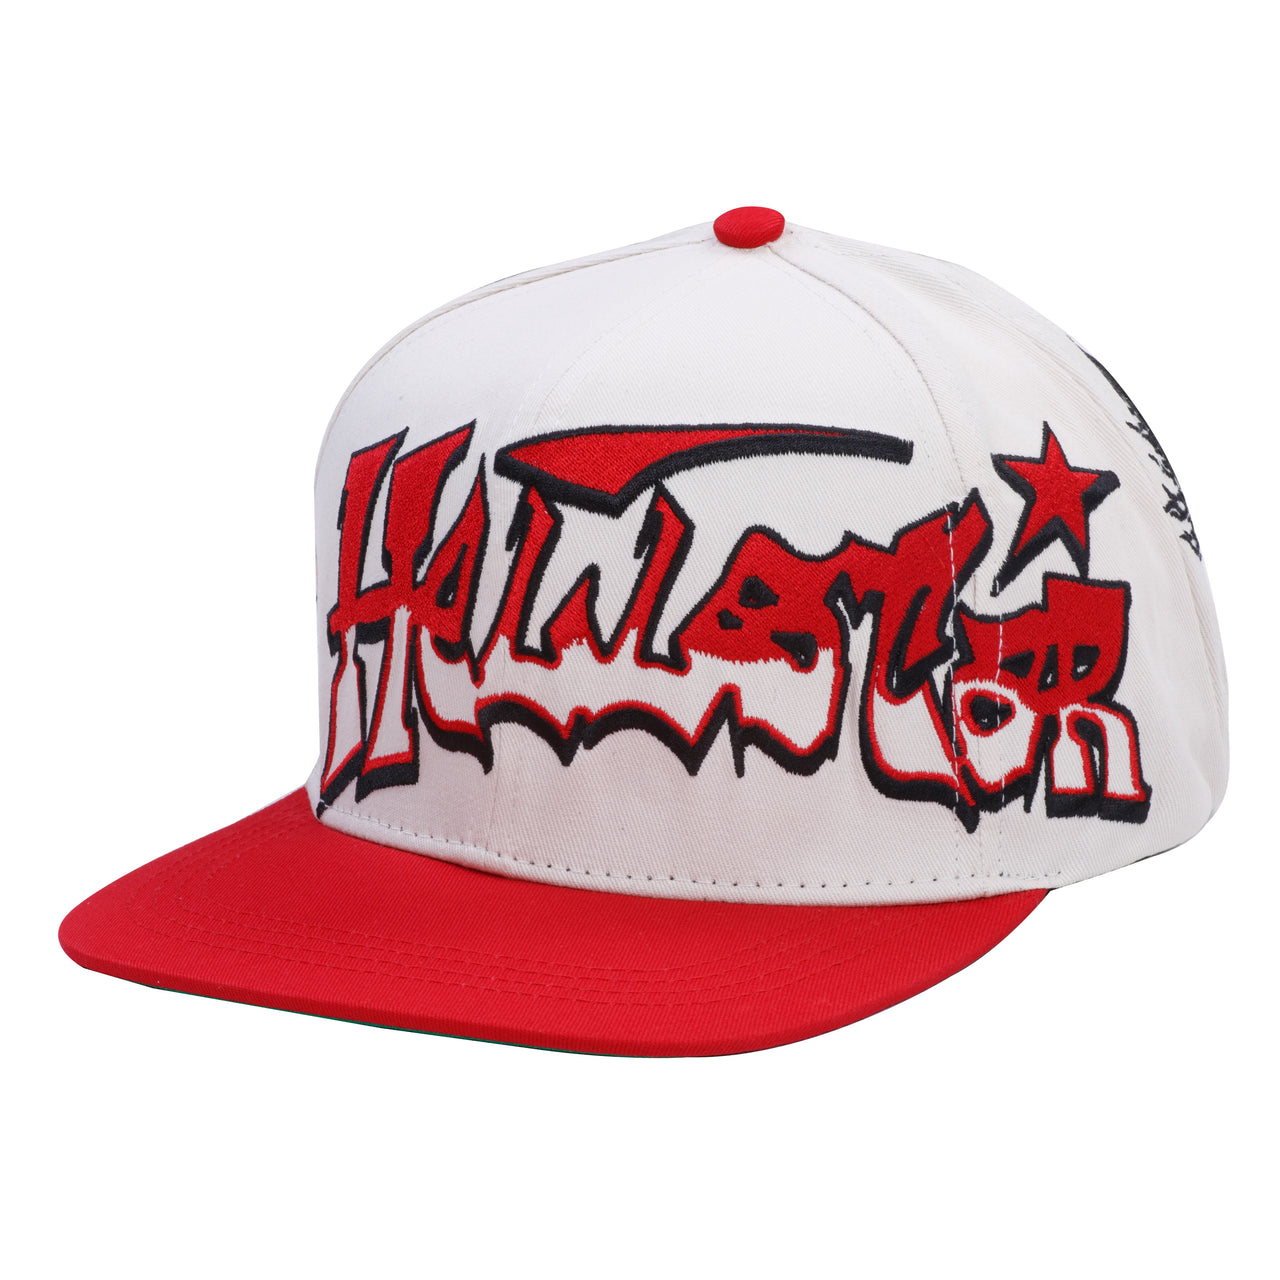 Hellstar Records Snapback Hat White Red